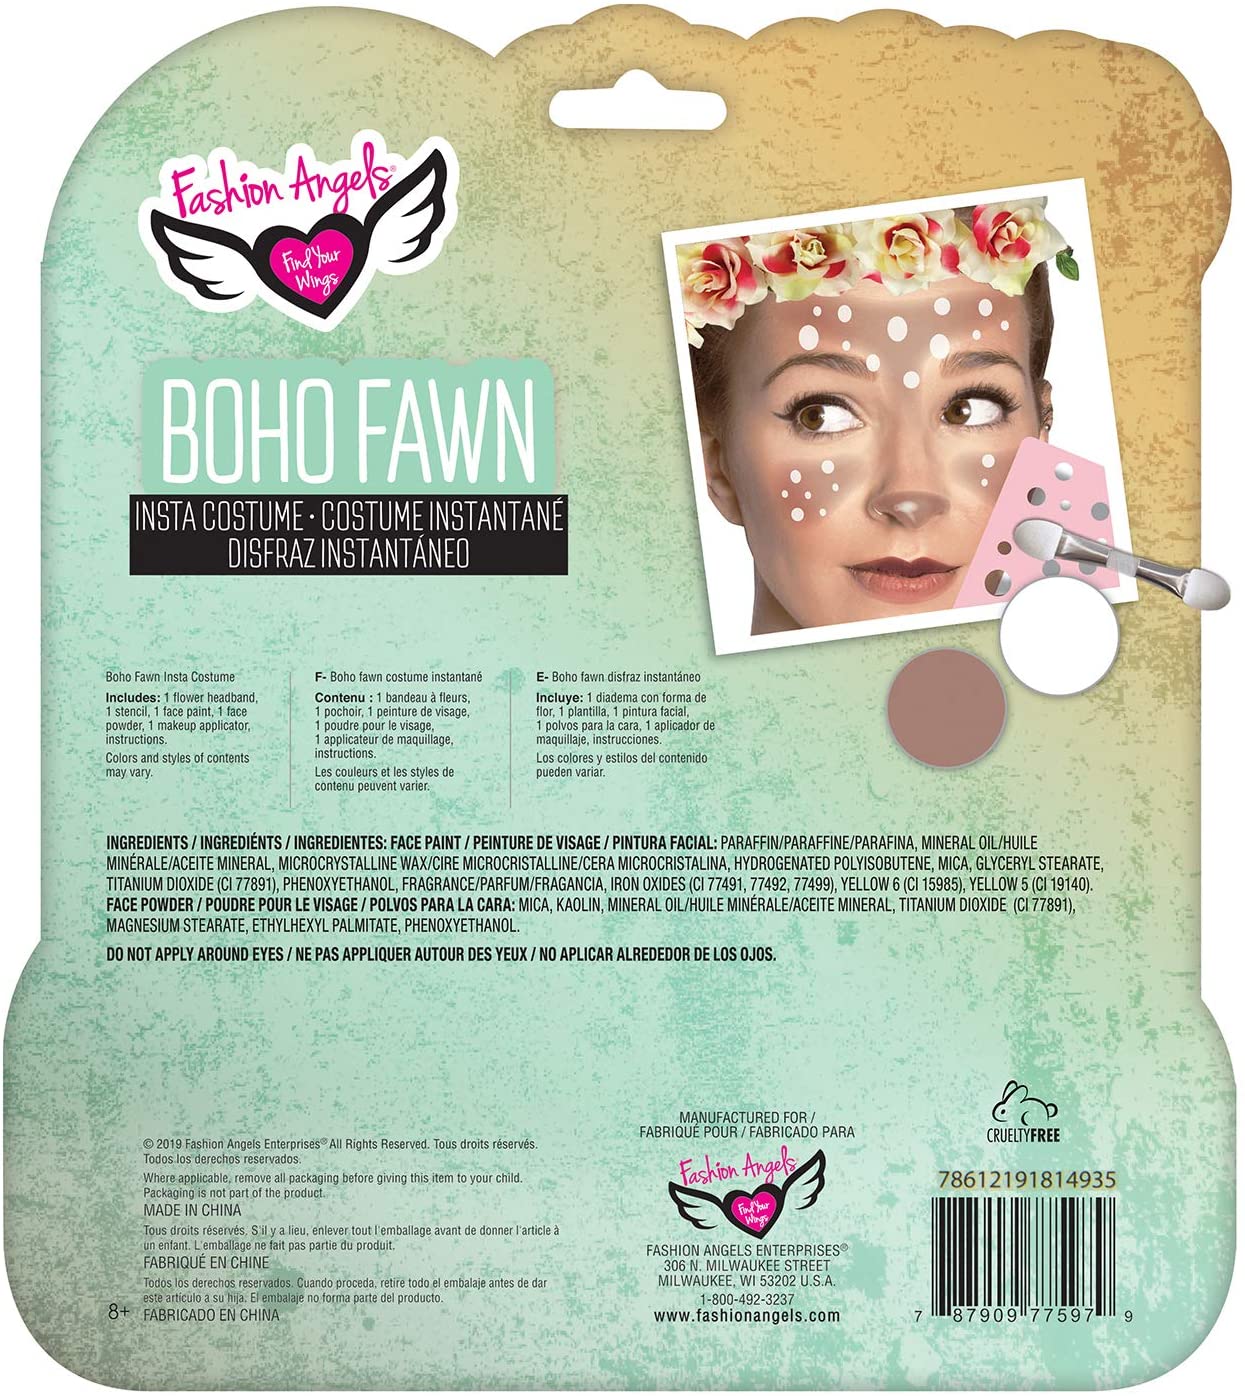 Boho Fawn Insta Costume by Fashion Angels # 77597